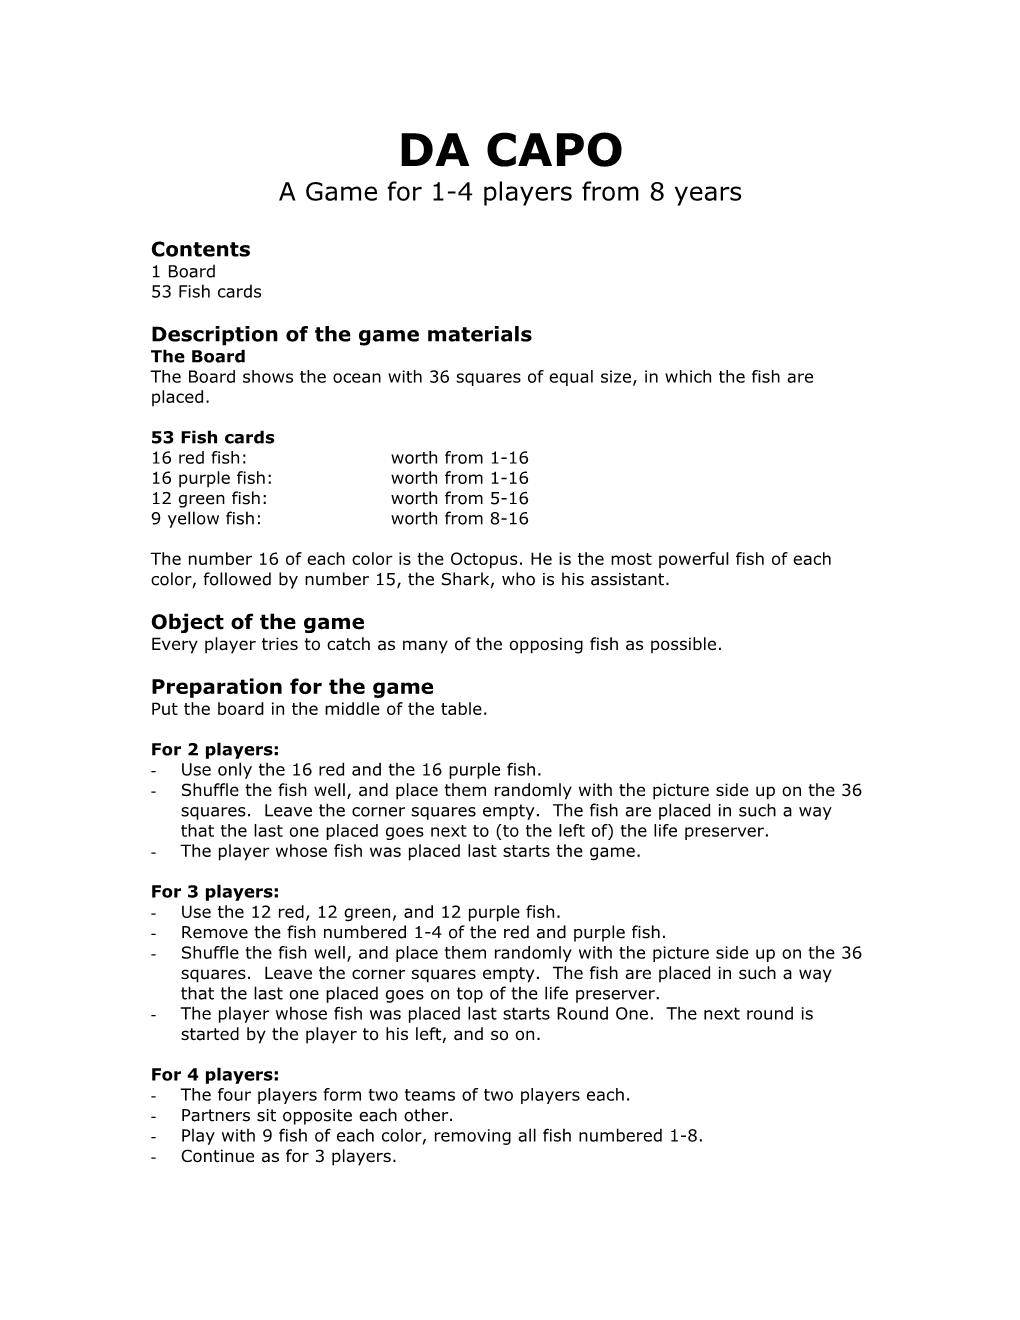 Description of the Game Materials